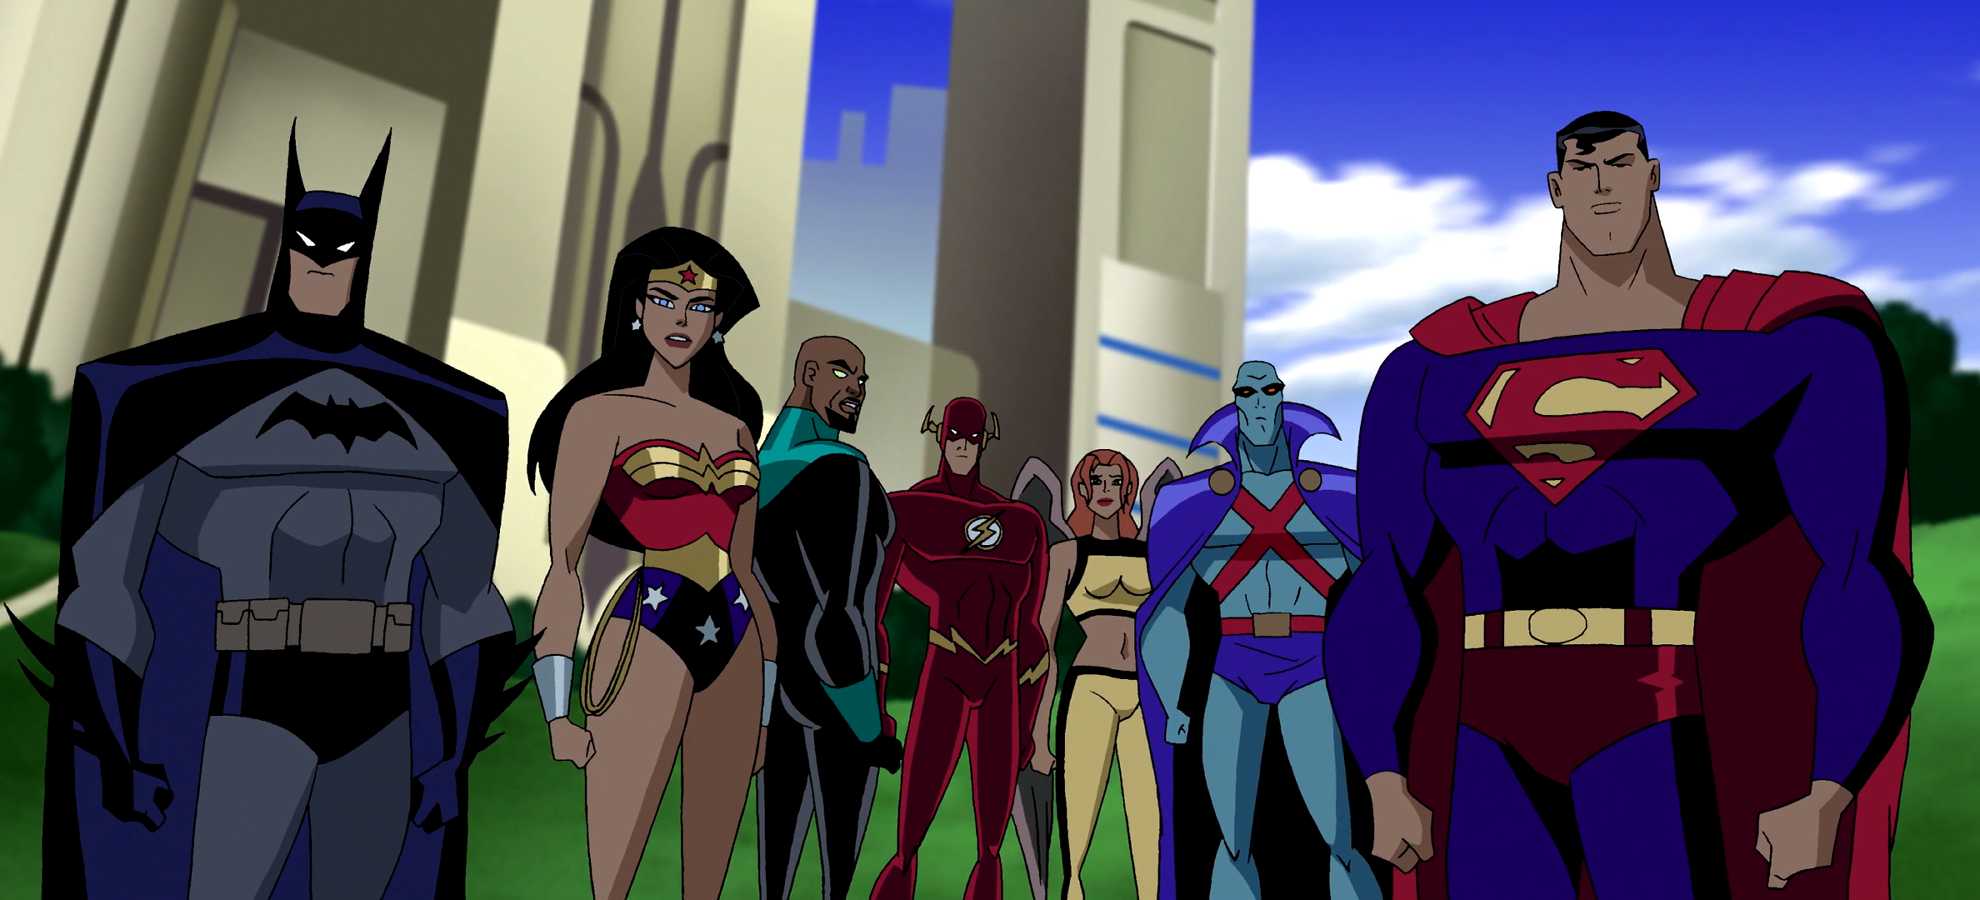 Justice league animated series reunion